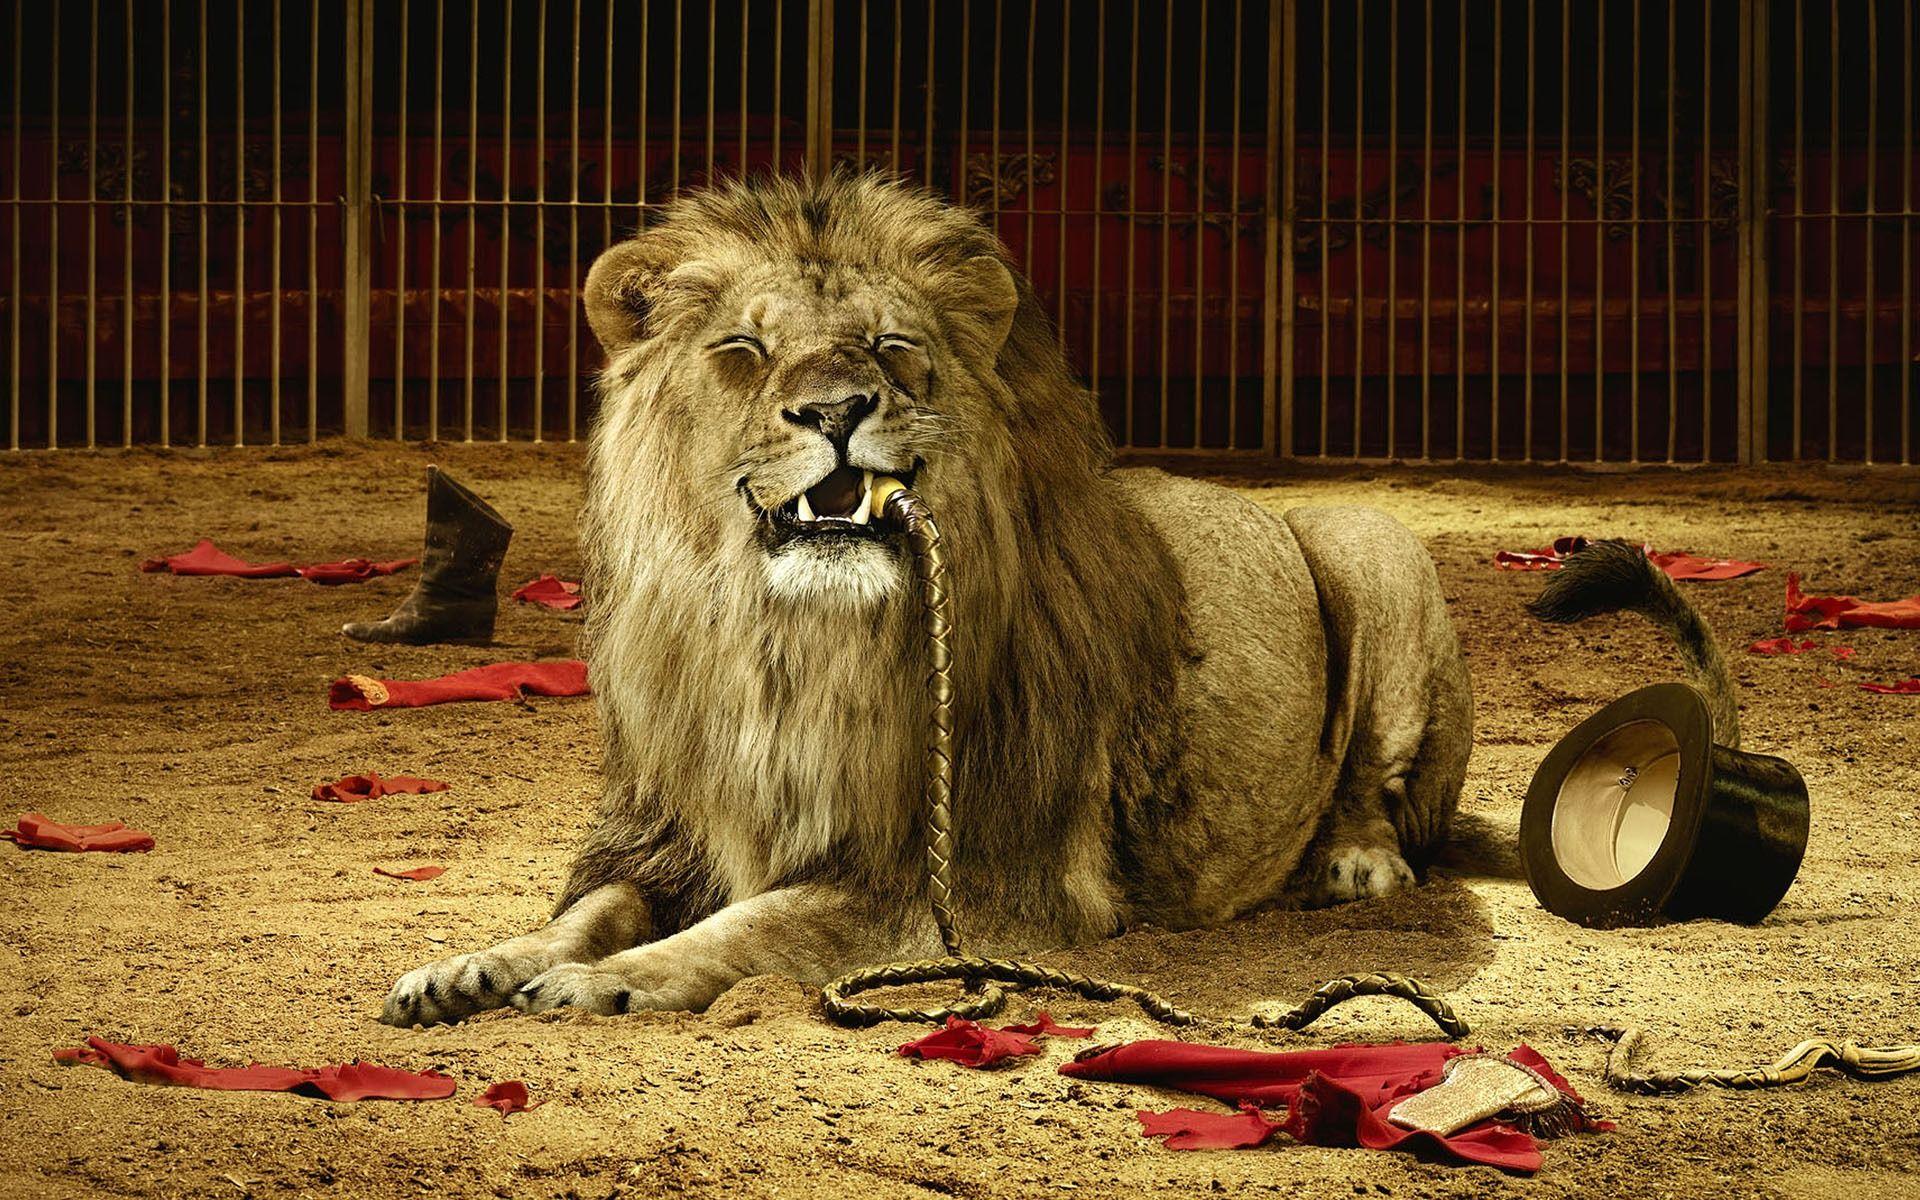 Circus Lion Wallpaper Big Cats Animals Wallpaper in jpg format